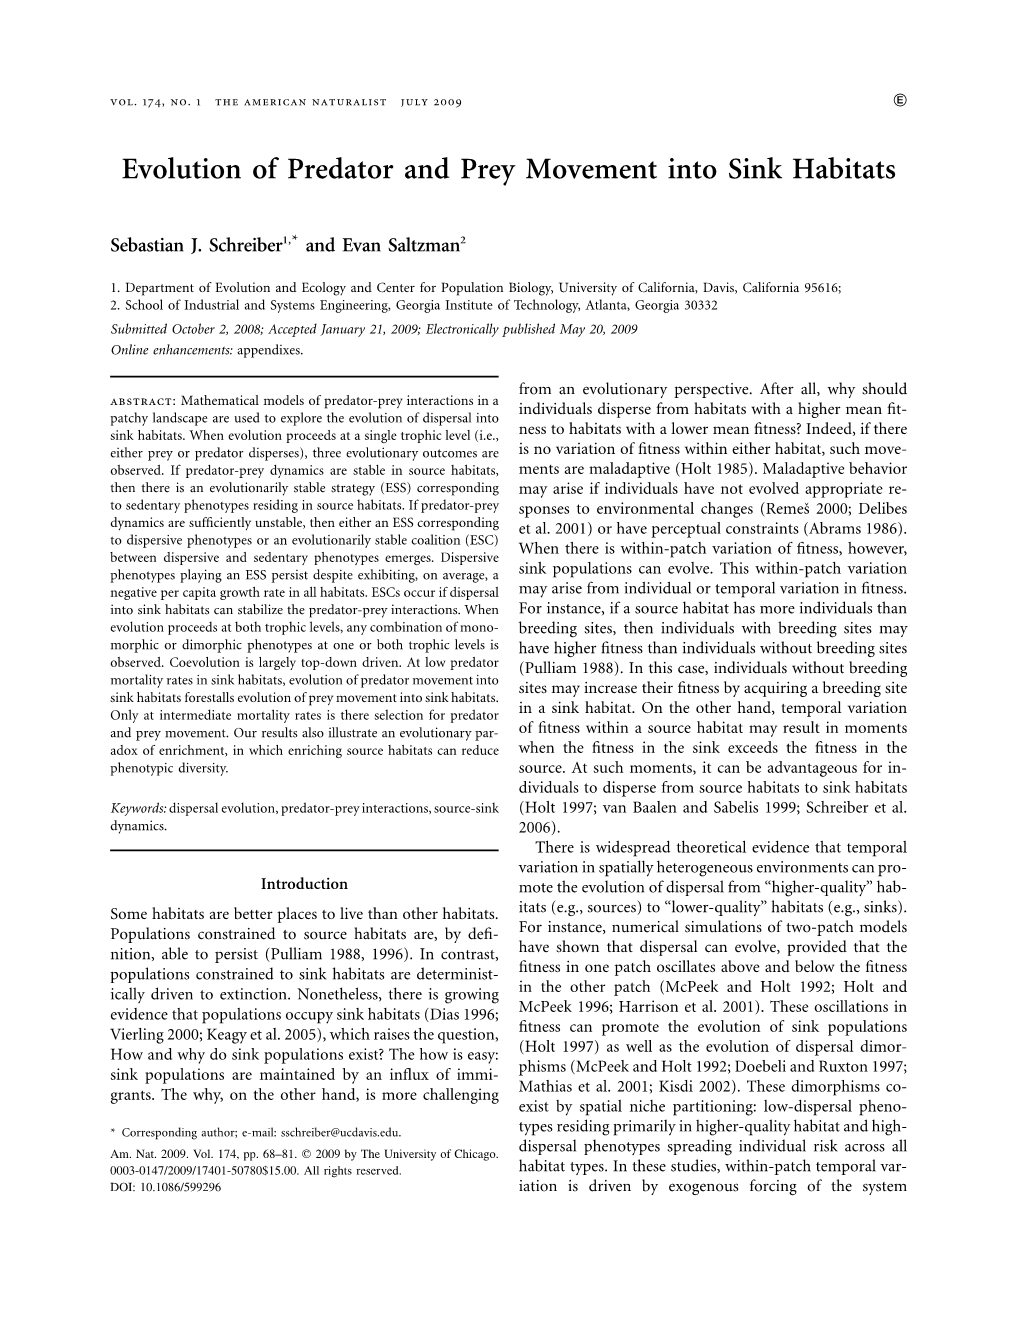 Evolution of Predator and Prey Movement Into Sink Habitats